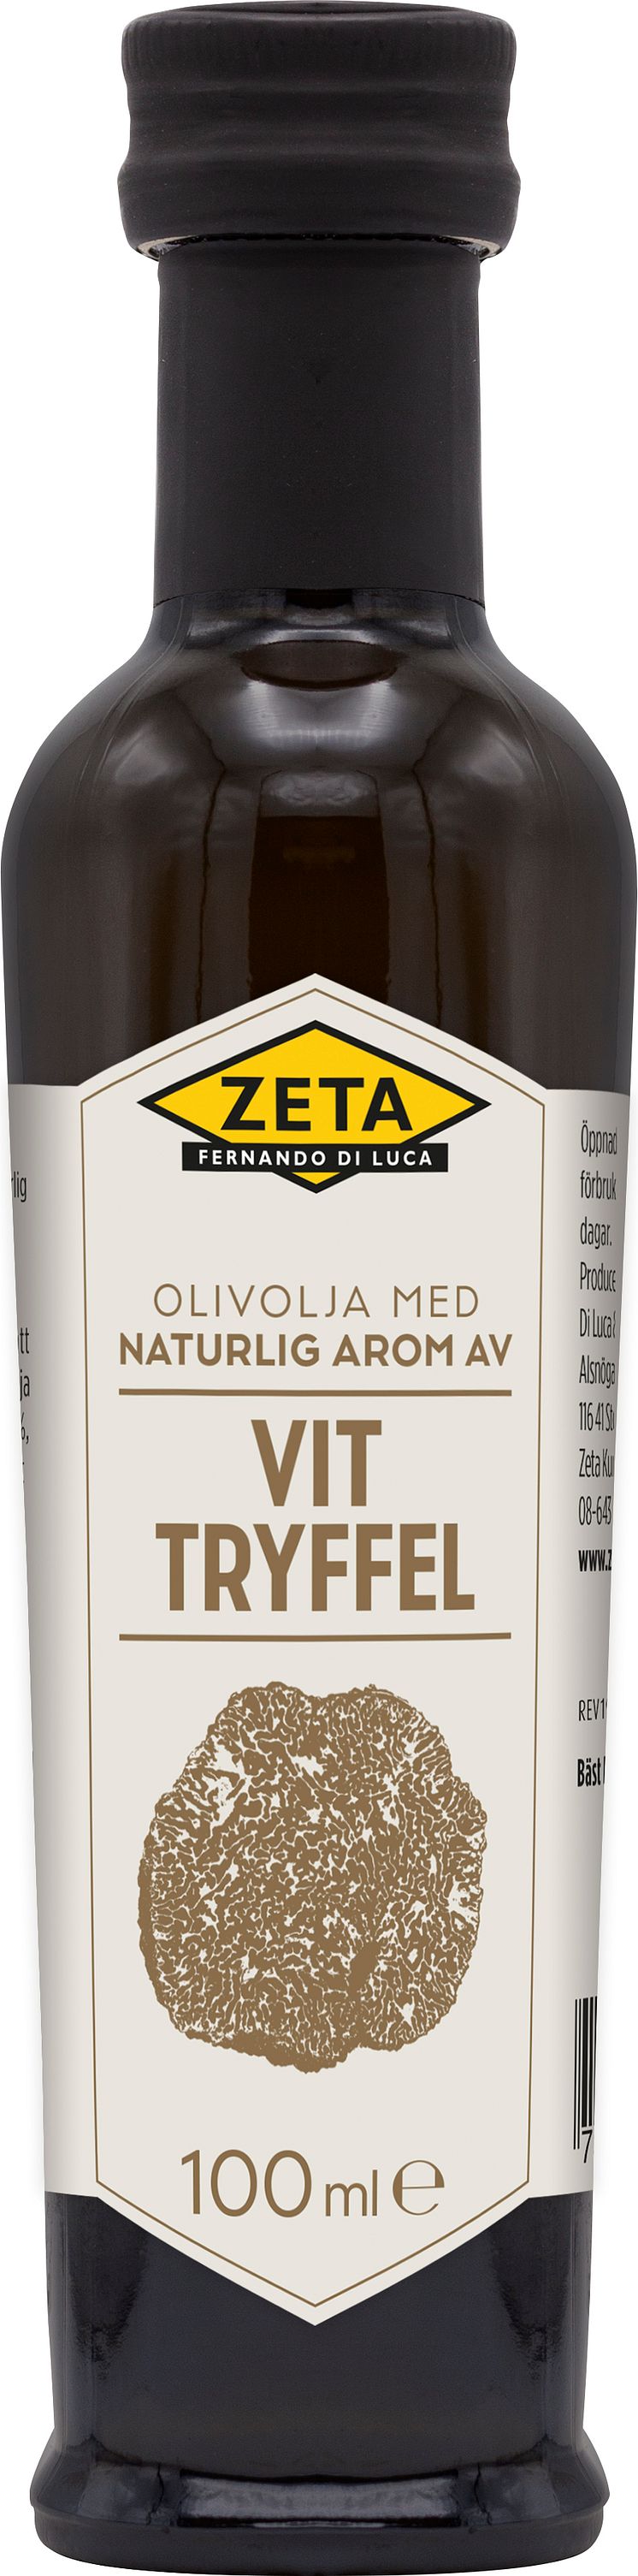 Produktbild Zeta vit tryffelolja, 100 ml